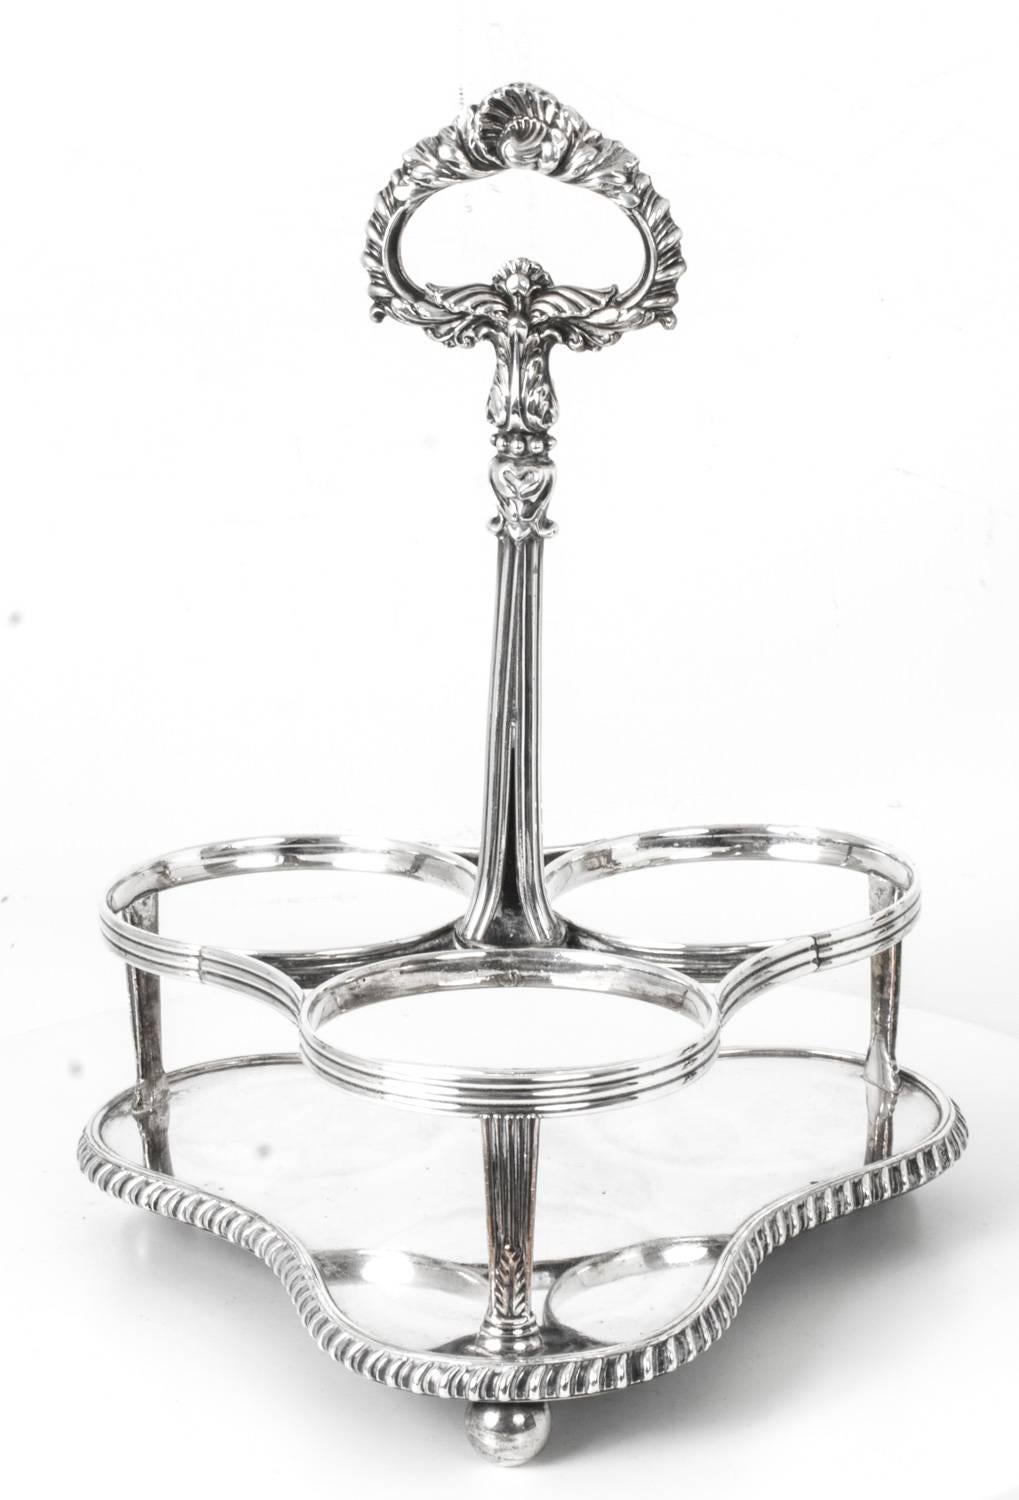 British 19th Century Regency Silver Plated Decanter Stand Matthew Boulton